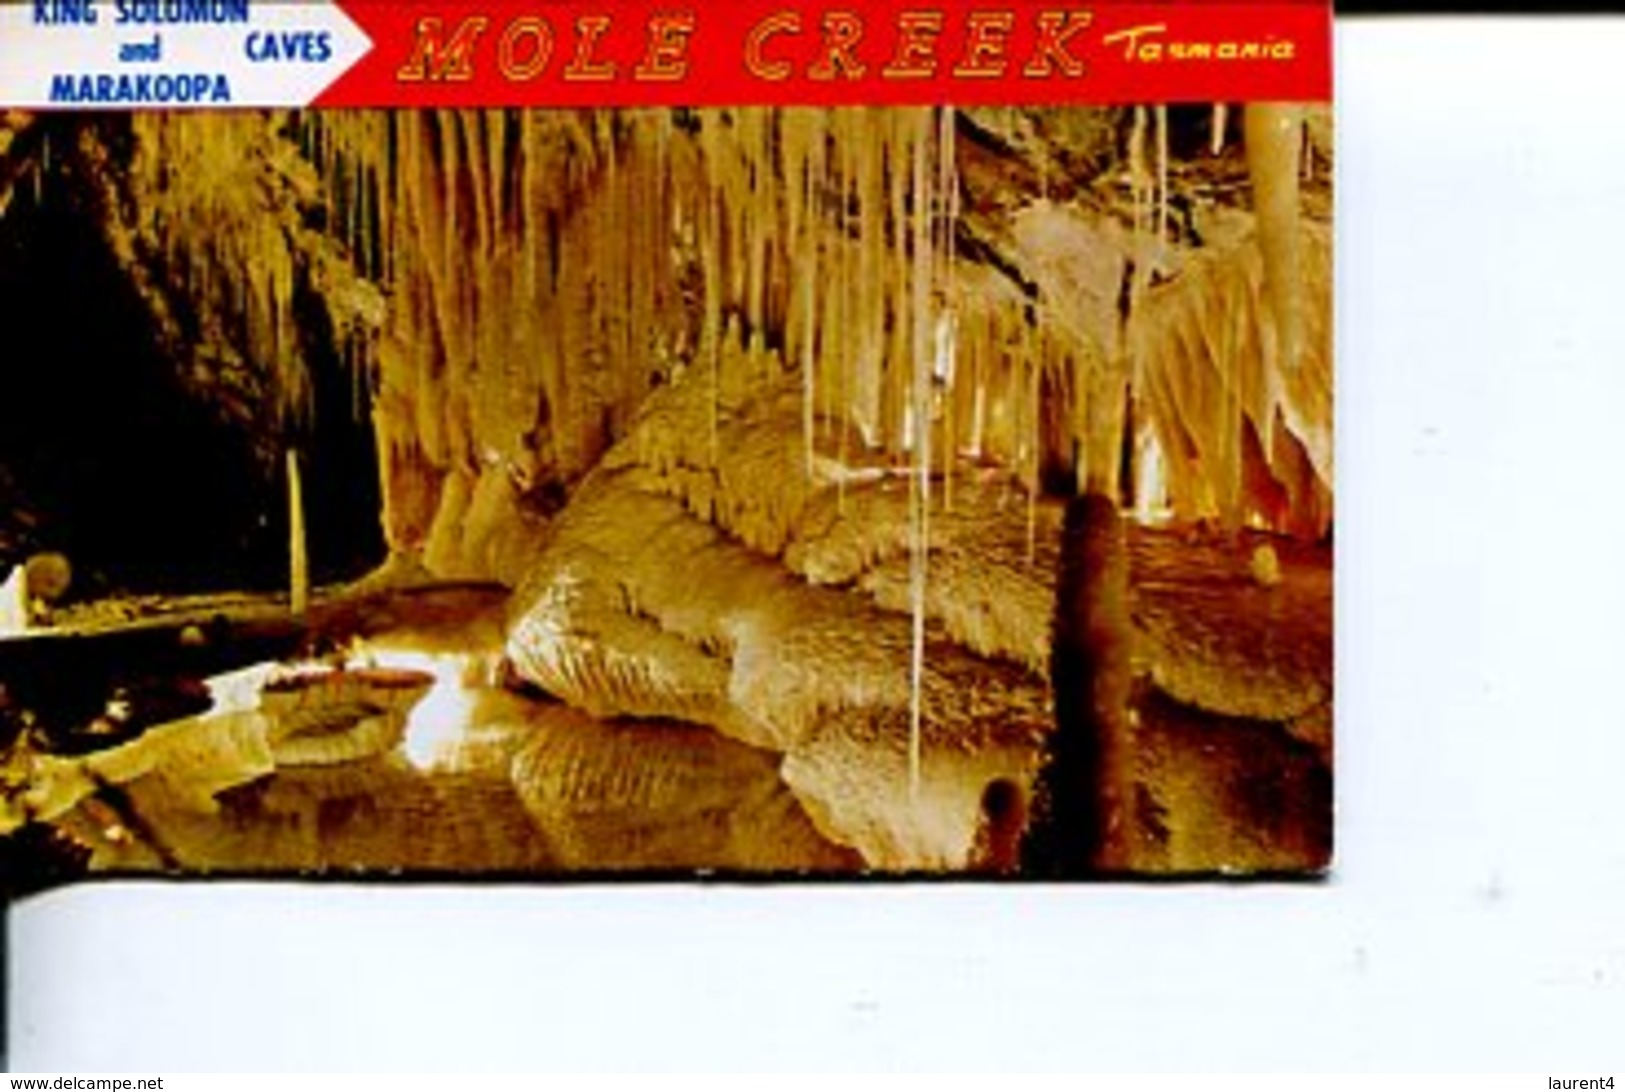 (Booklet 72) Postcard Booklet -  (mint / Neuf) - TAS - Mole Creek Caves - Wilderness